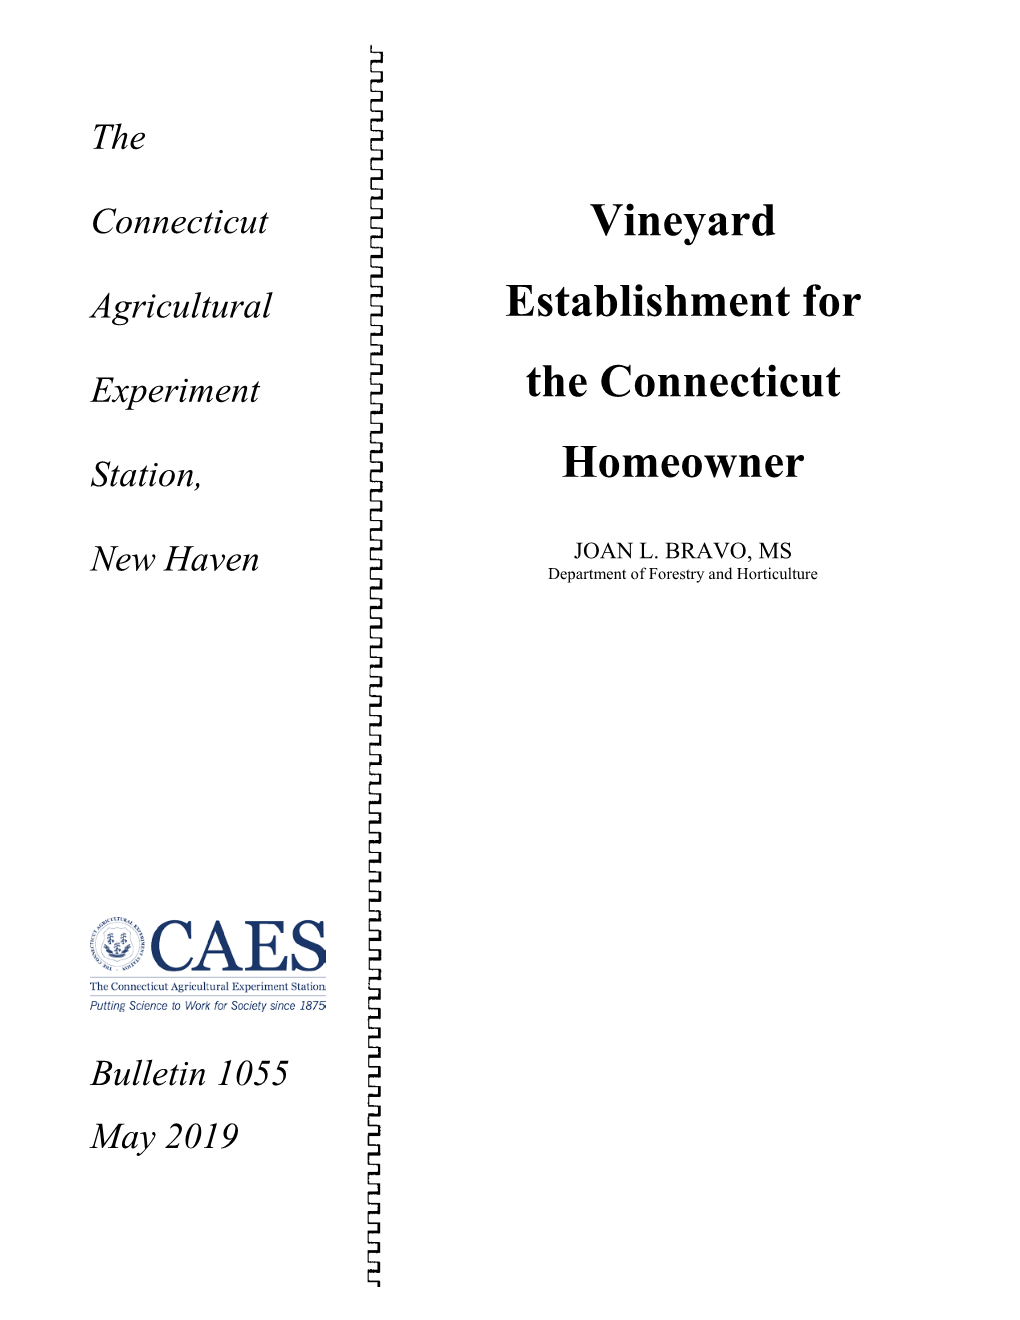 Vineyard Establishment for the Connecticut Homeowner